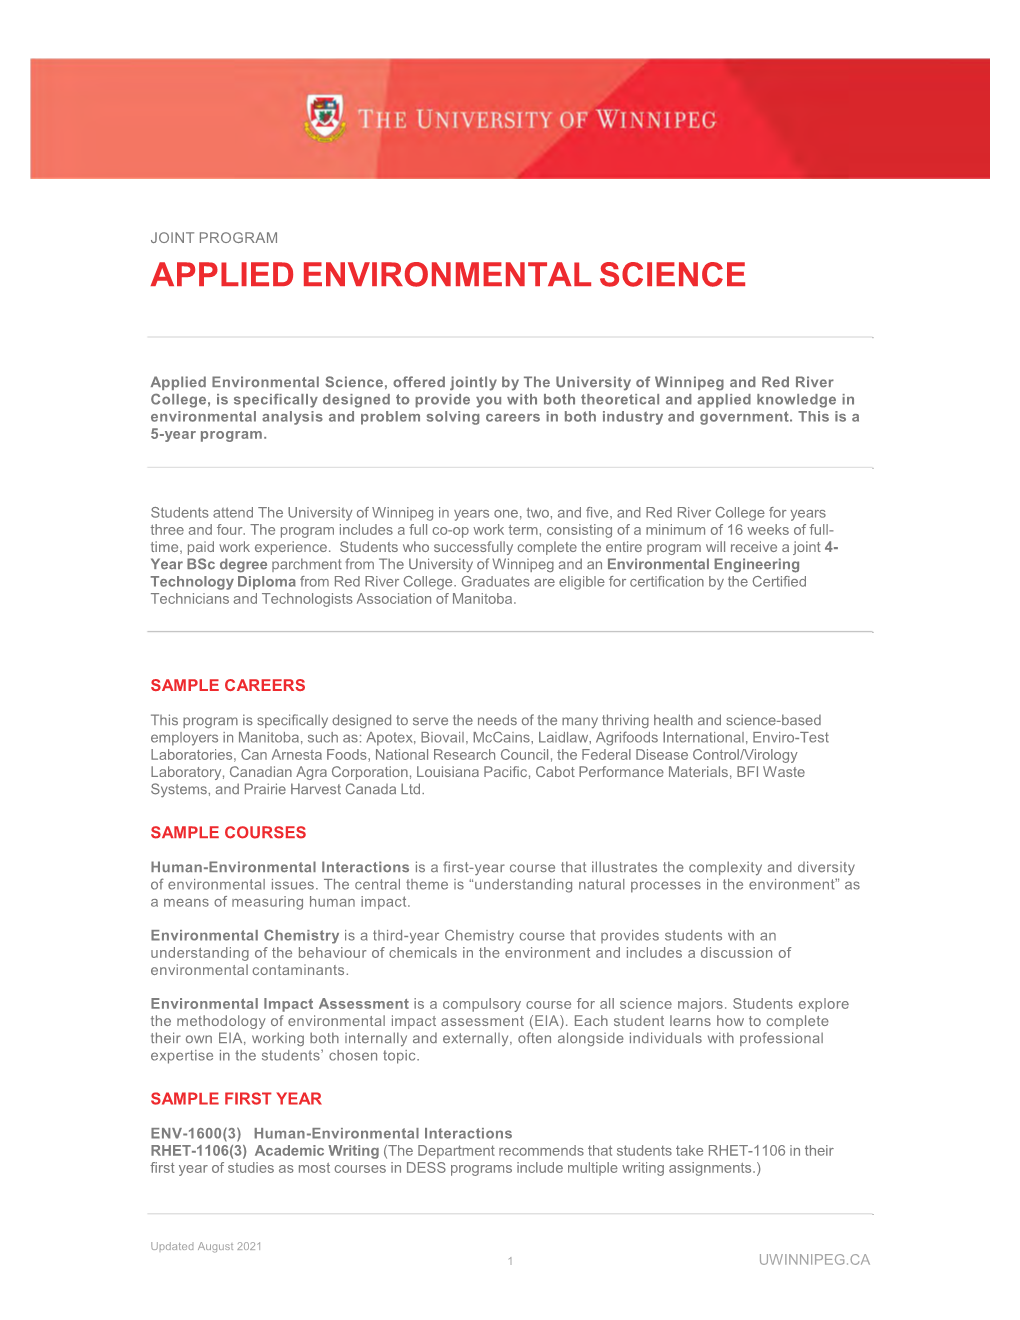 Applied Environmental Science Fact Sheet